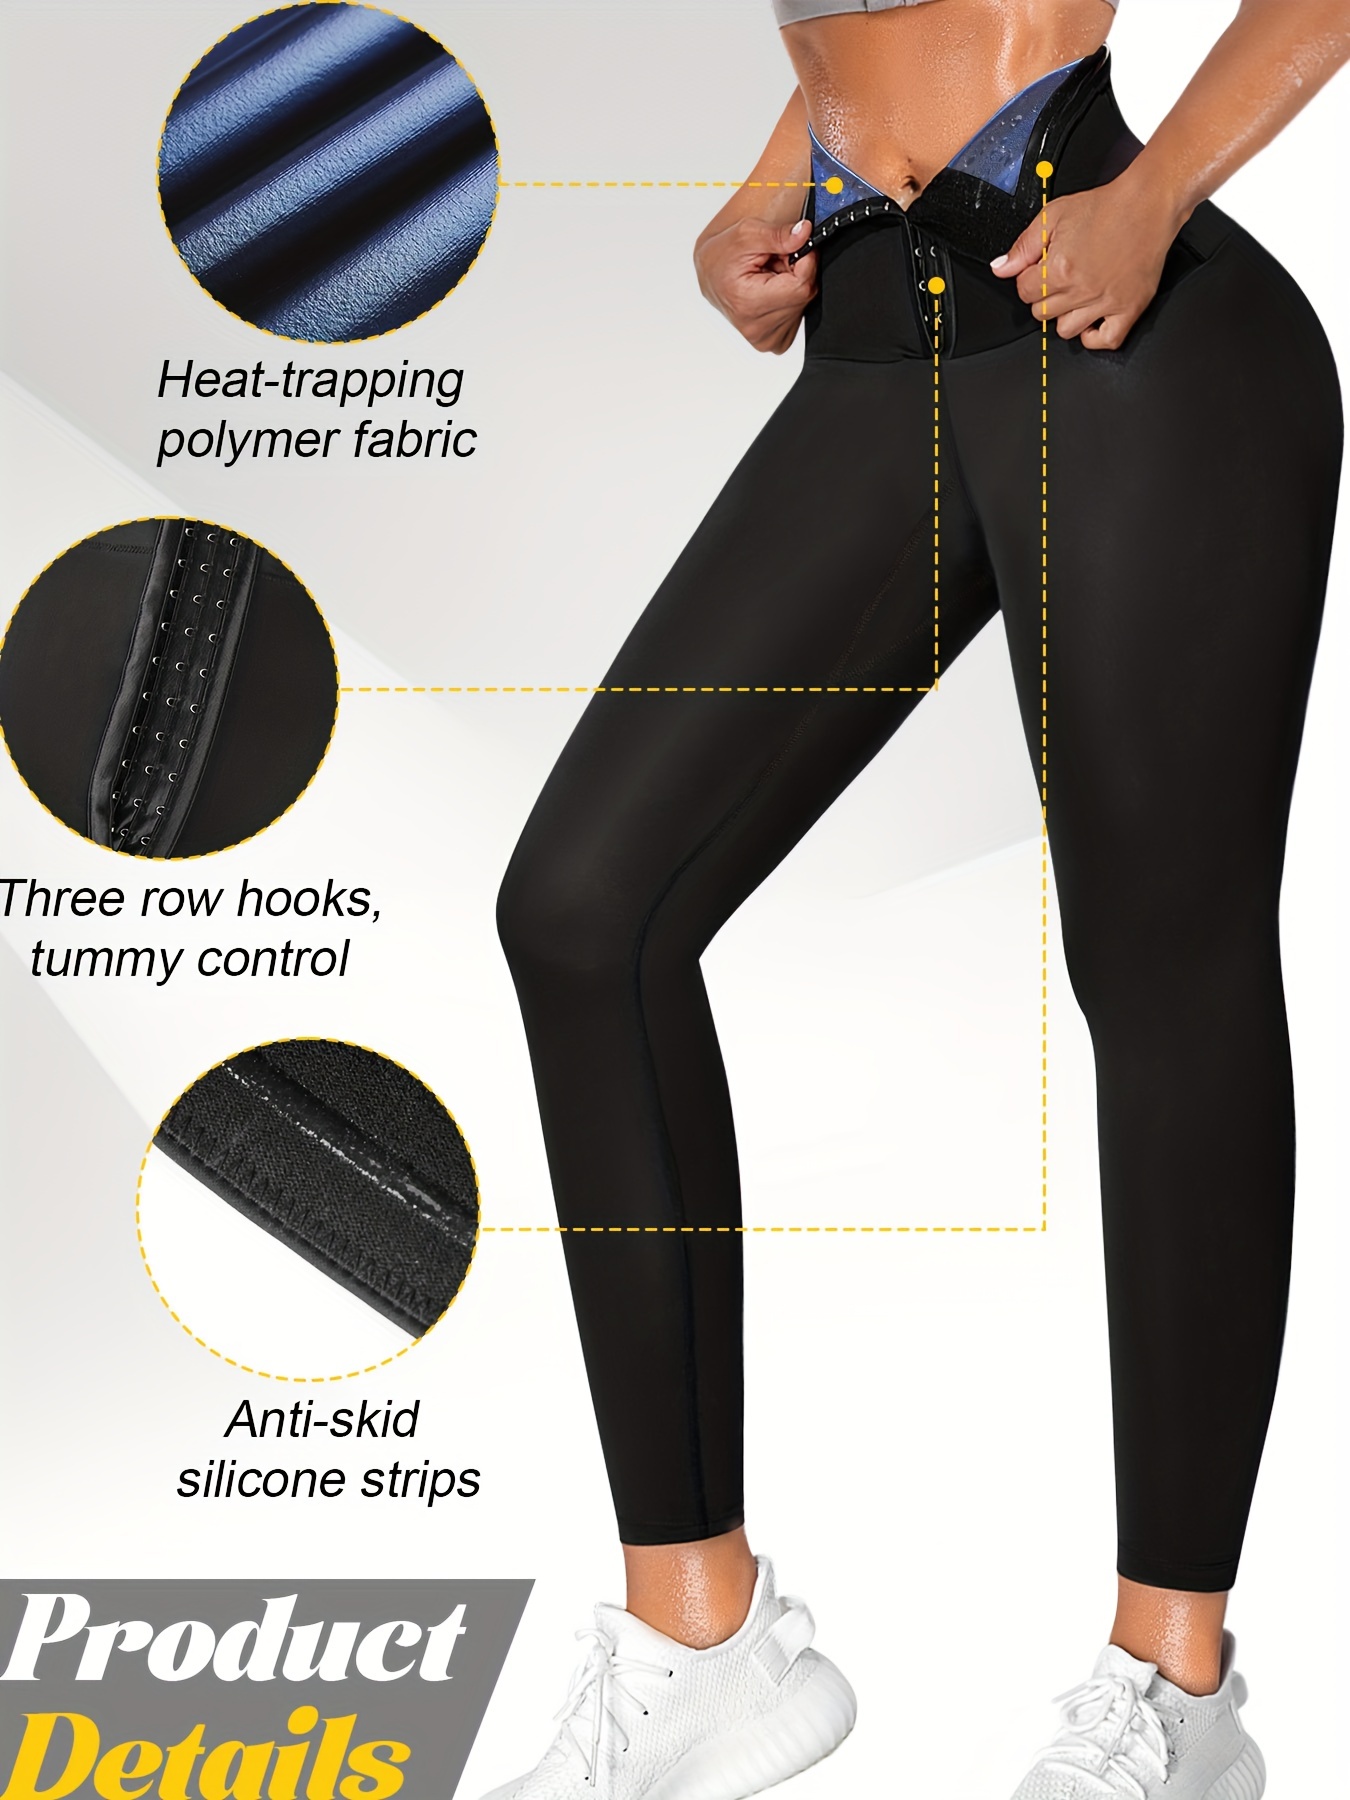  Ausom Womens Sweat Body Shaper Shorts Hot Thermo Slimming Sauna  Pants Weight Loss Black Shapewear : Sports & Outdoors